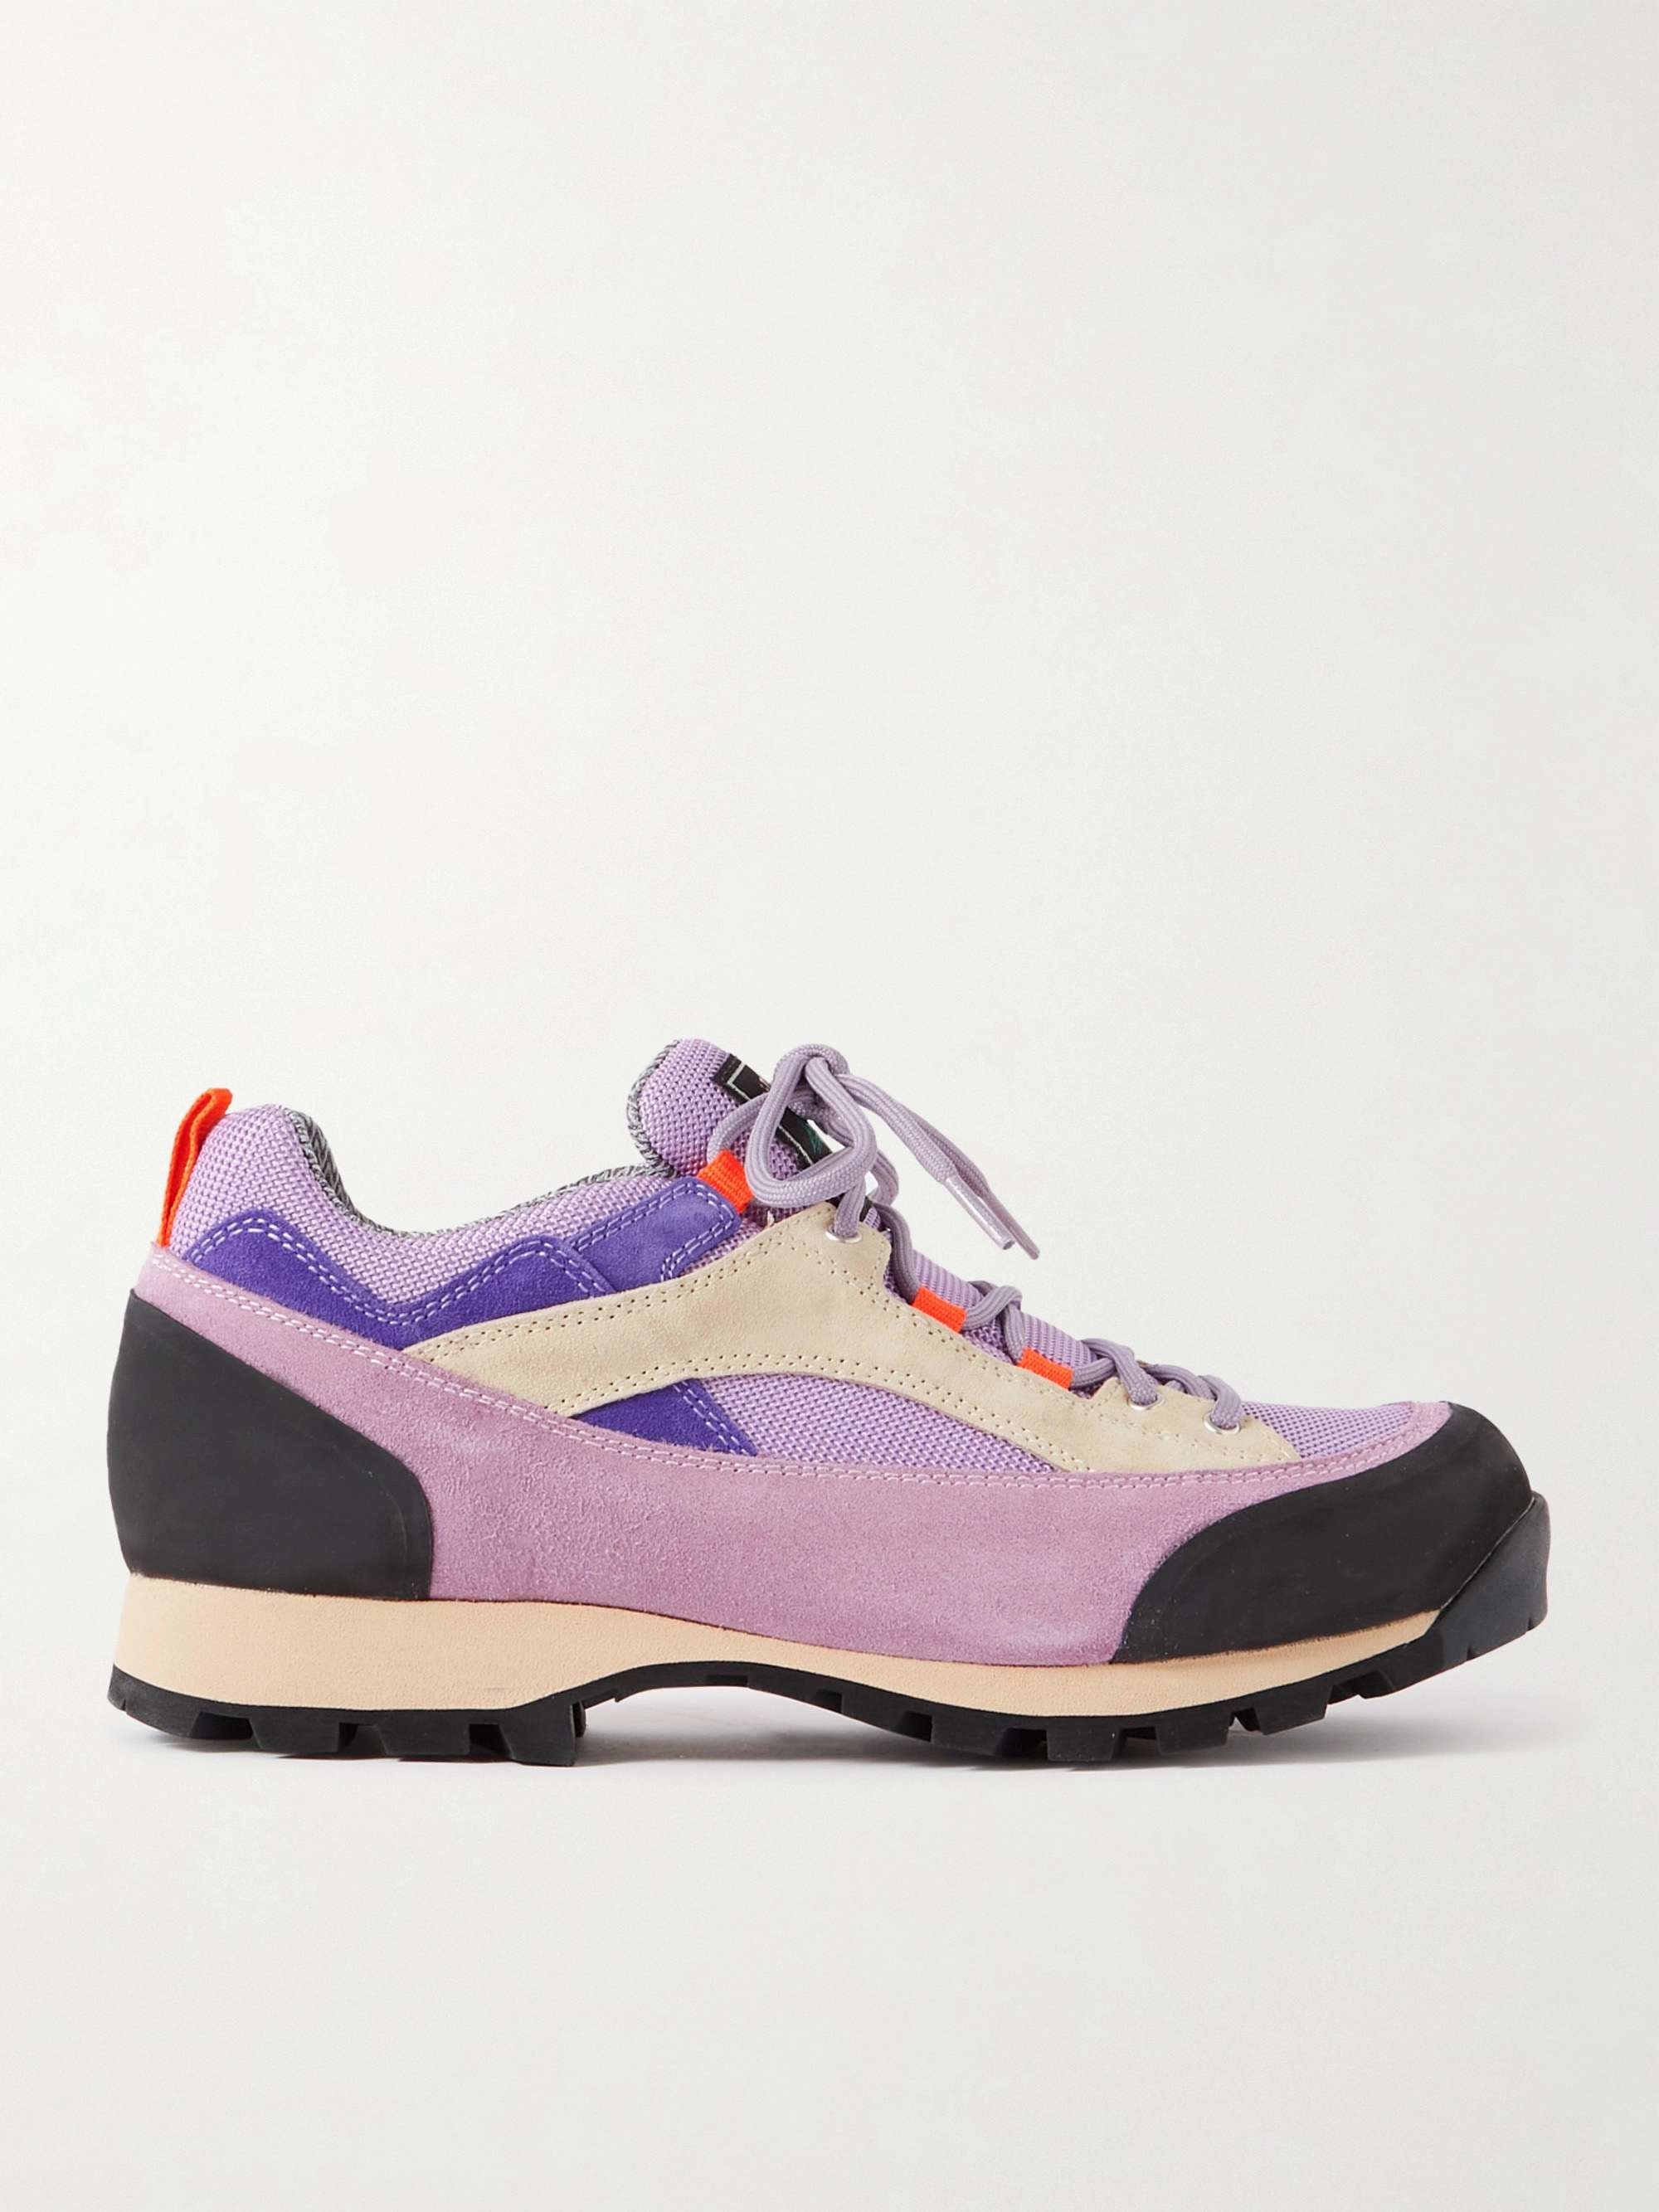 Purple Grappa Suede and Mesh Sneakers | DIEMME | MR PORTER